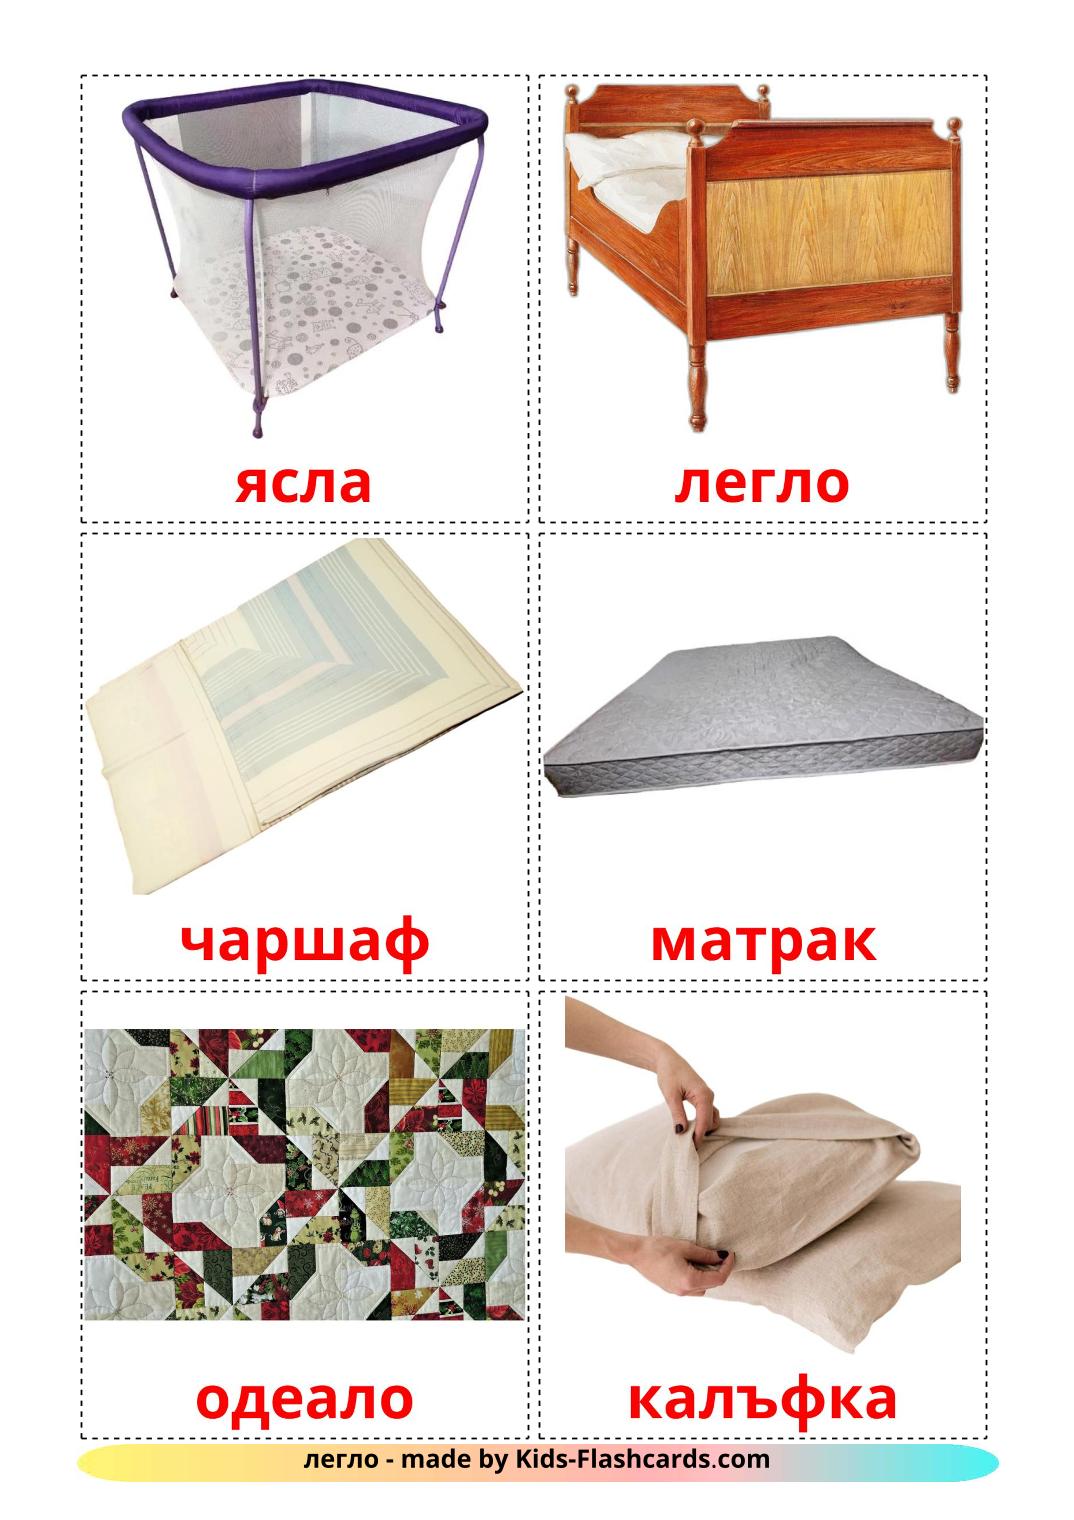 Bed - 15 Free Printable bulgarian Flashcards 